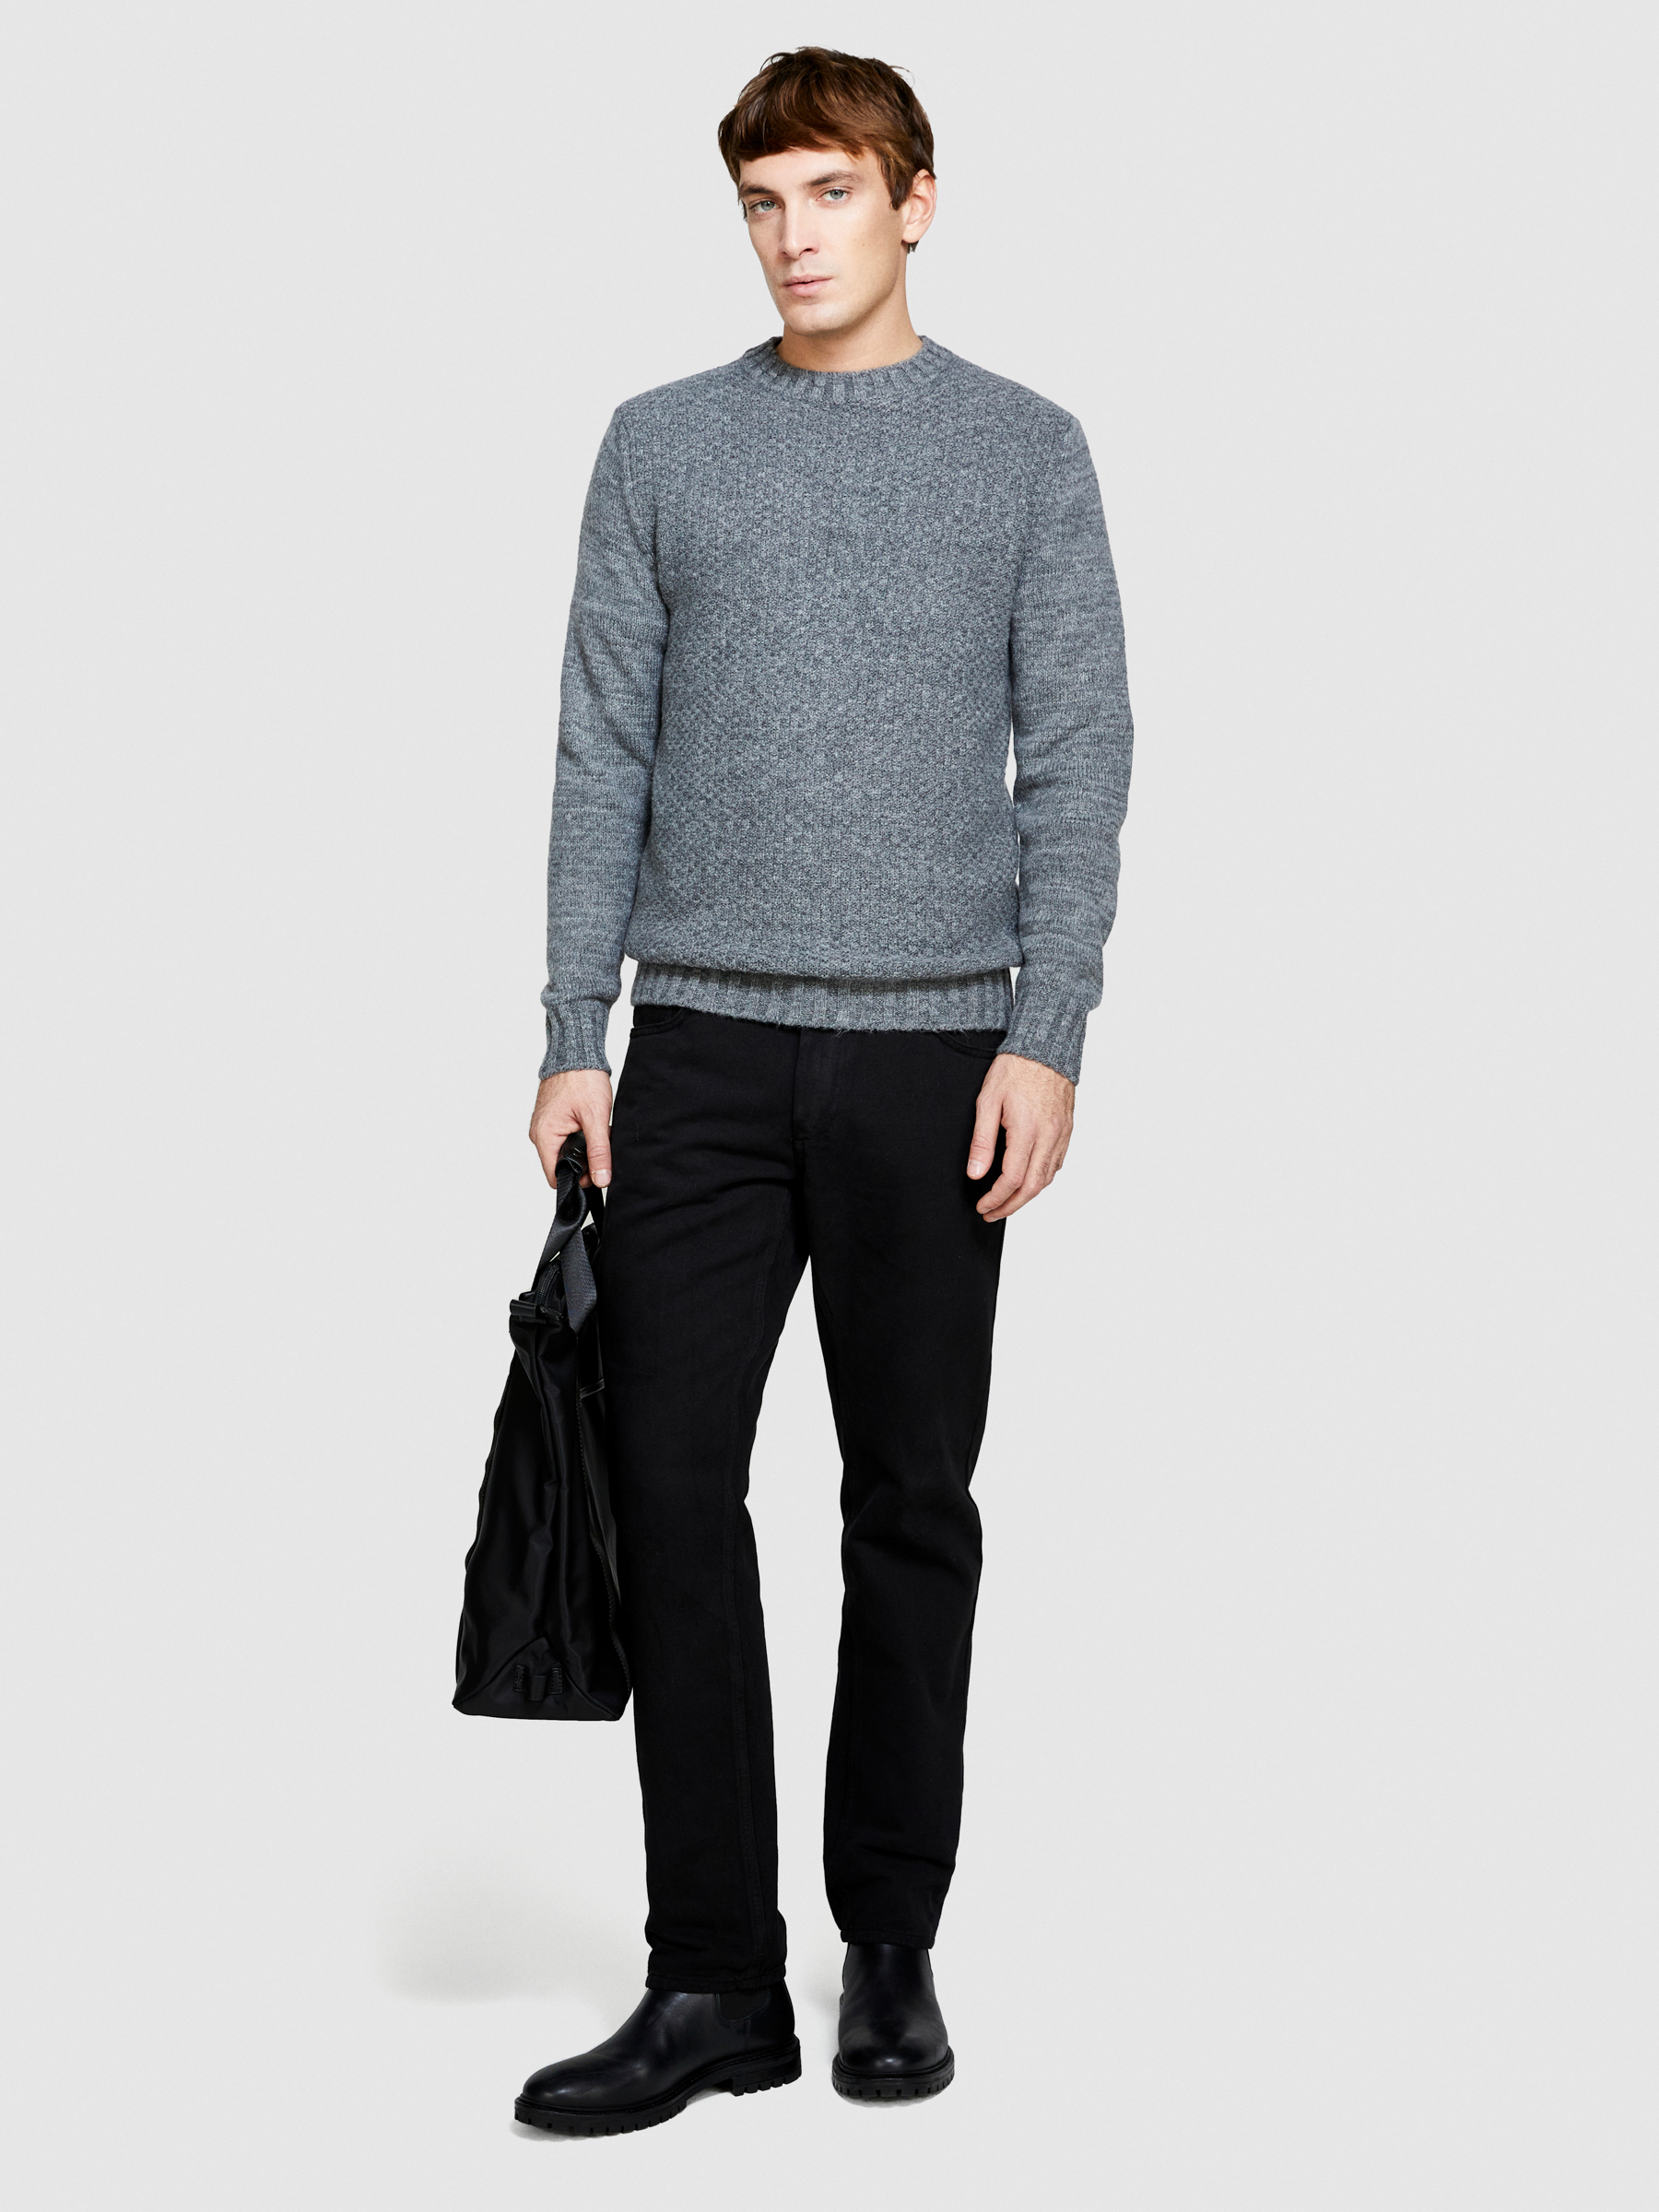 Sisley - Knit Sweater, Man, Gray, Size: L